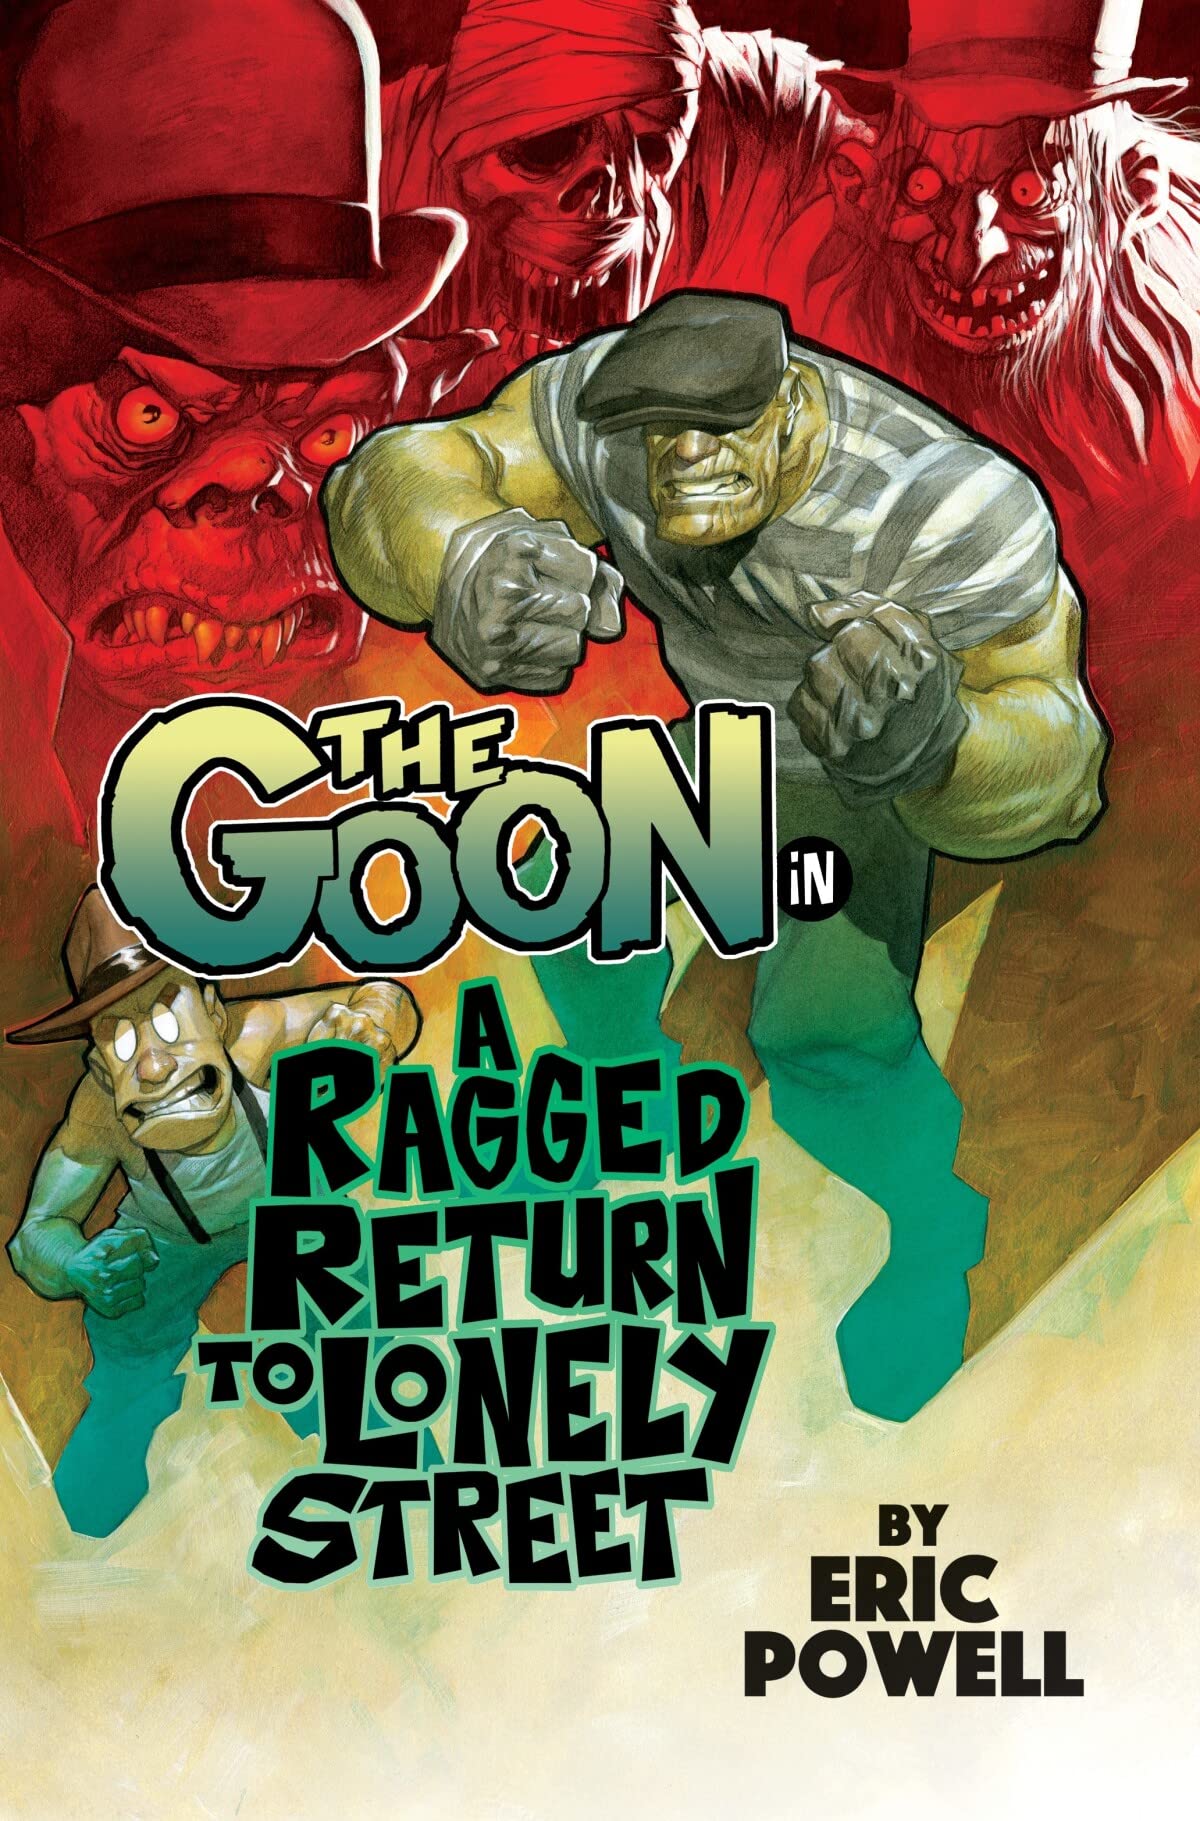 Mua The Goon Volume 1: A Ragged Return to Lonely Street trên Amazon Mỹ ...